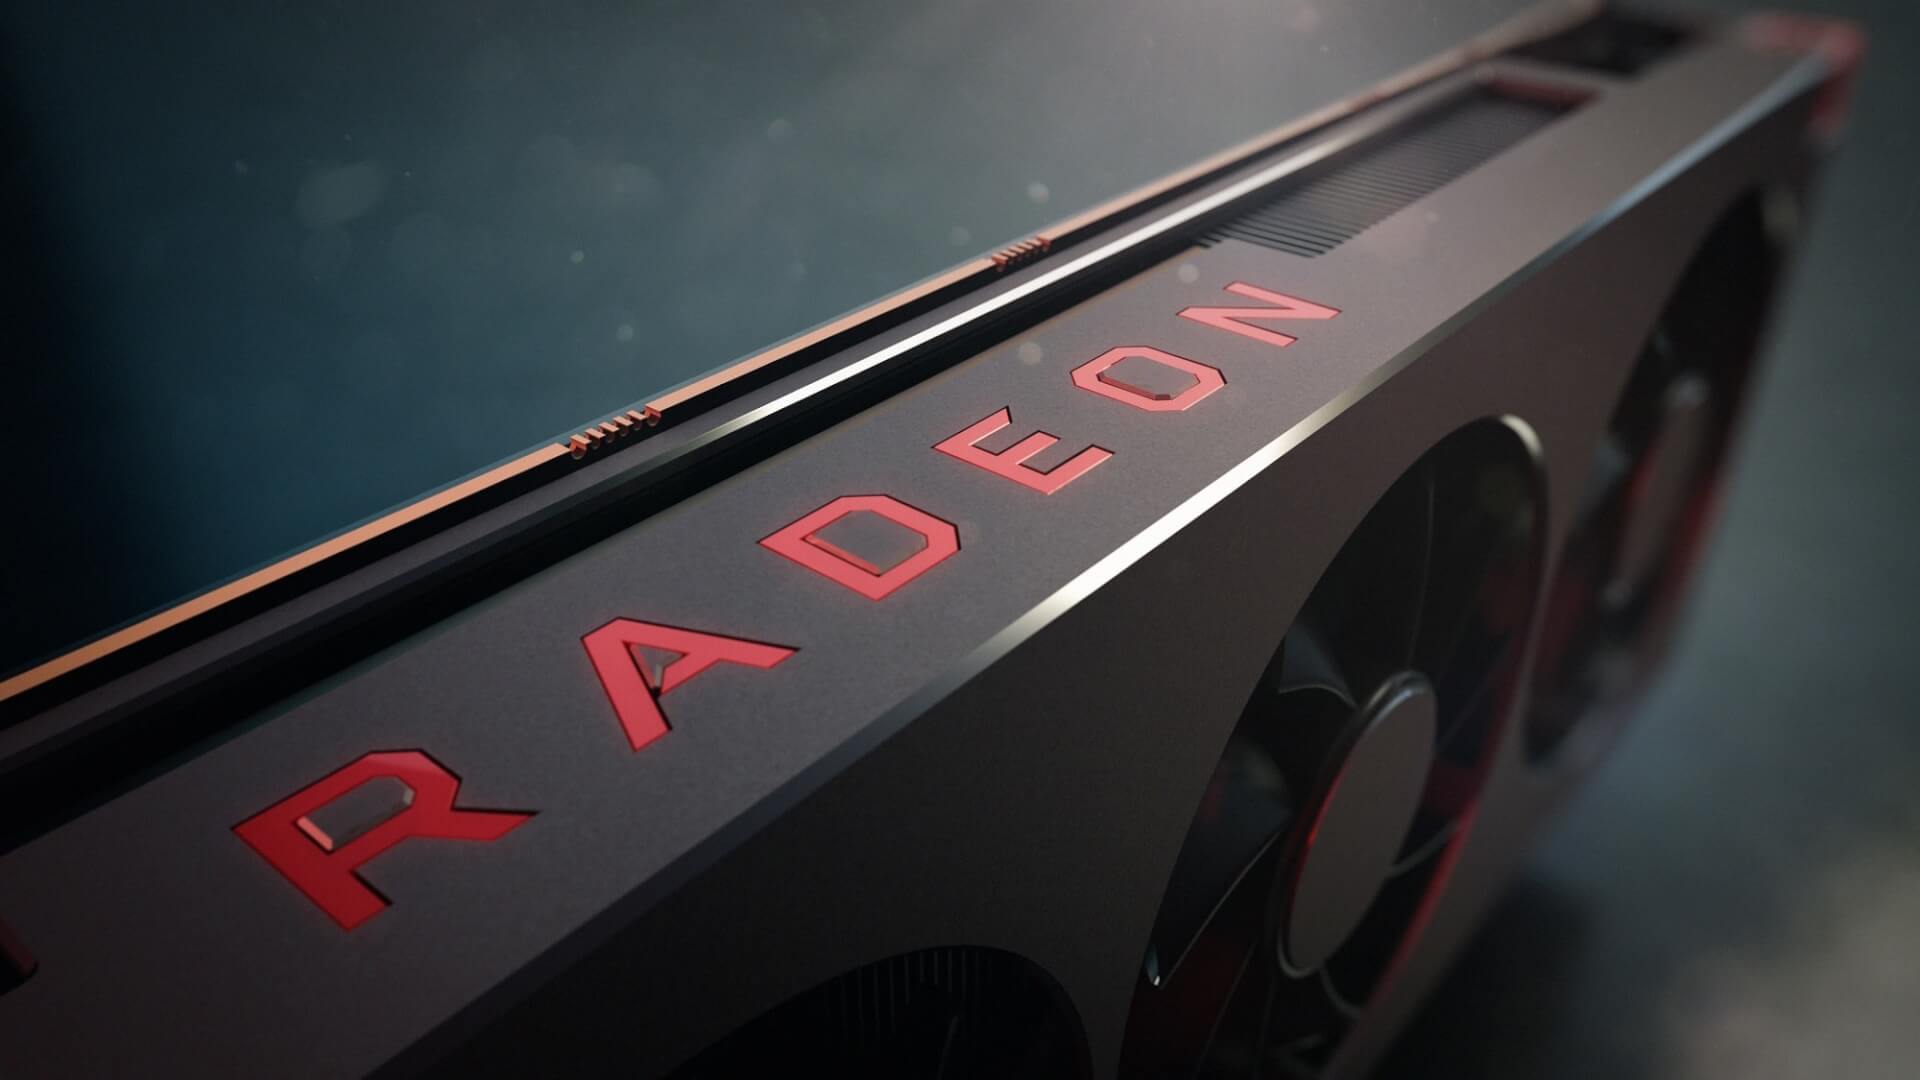 AMD Radeon RX 6600 XT Review